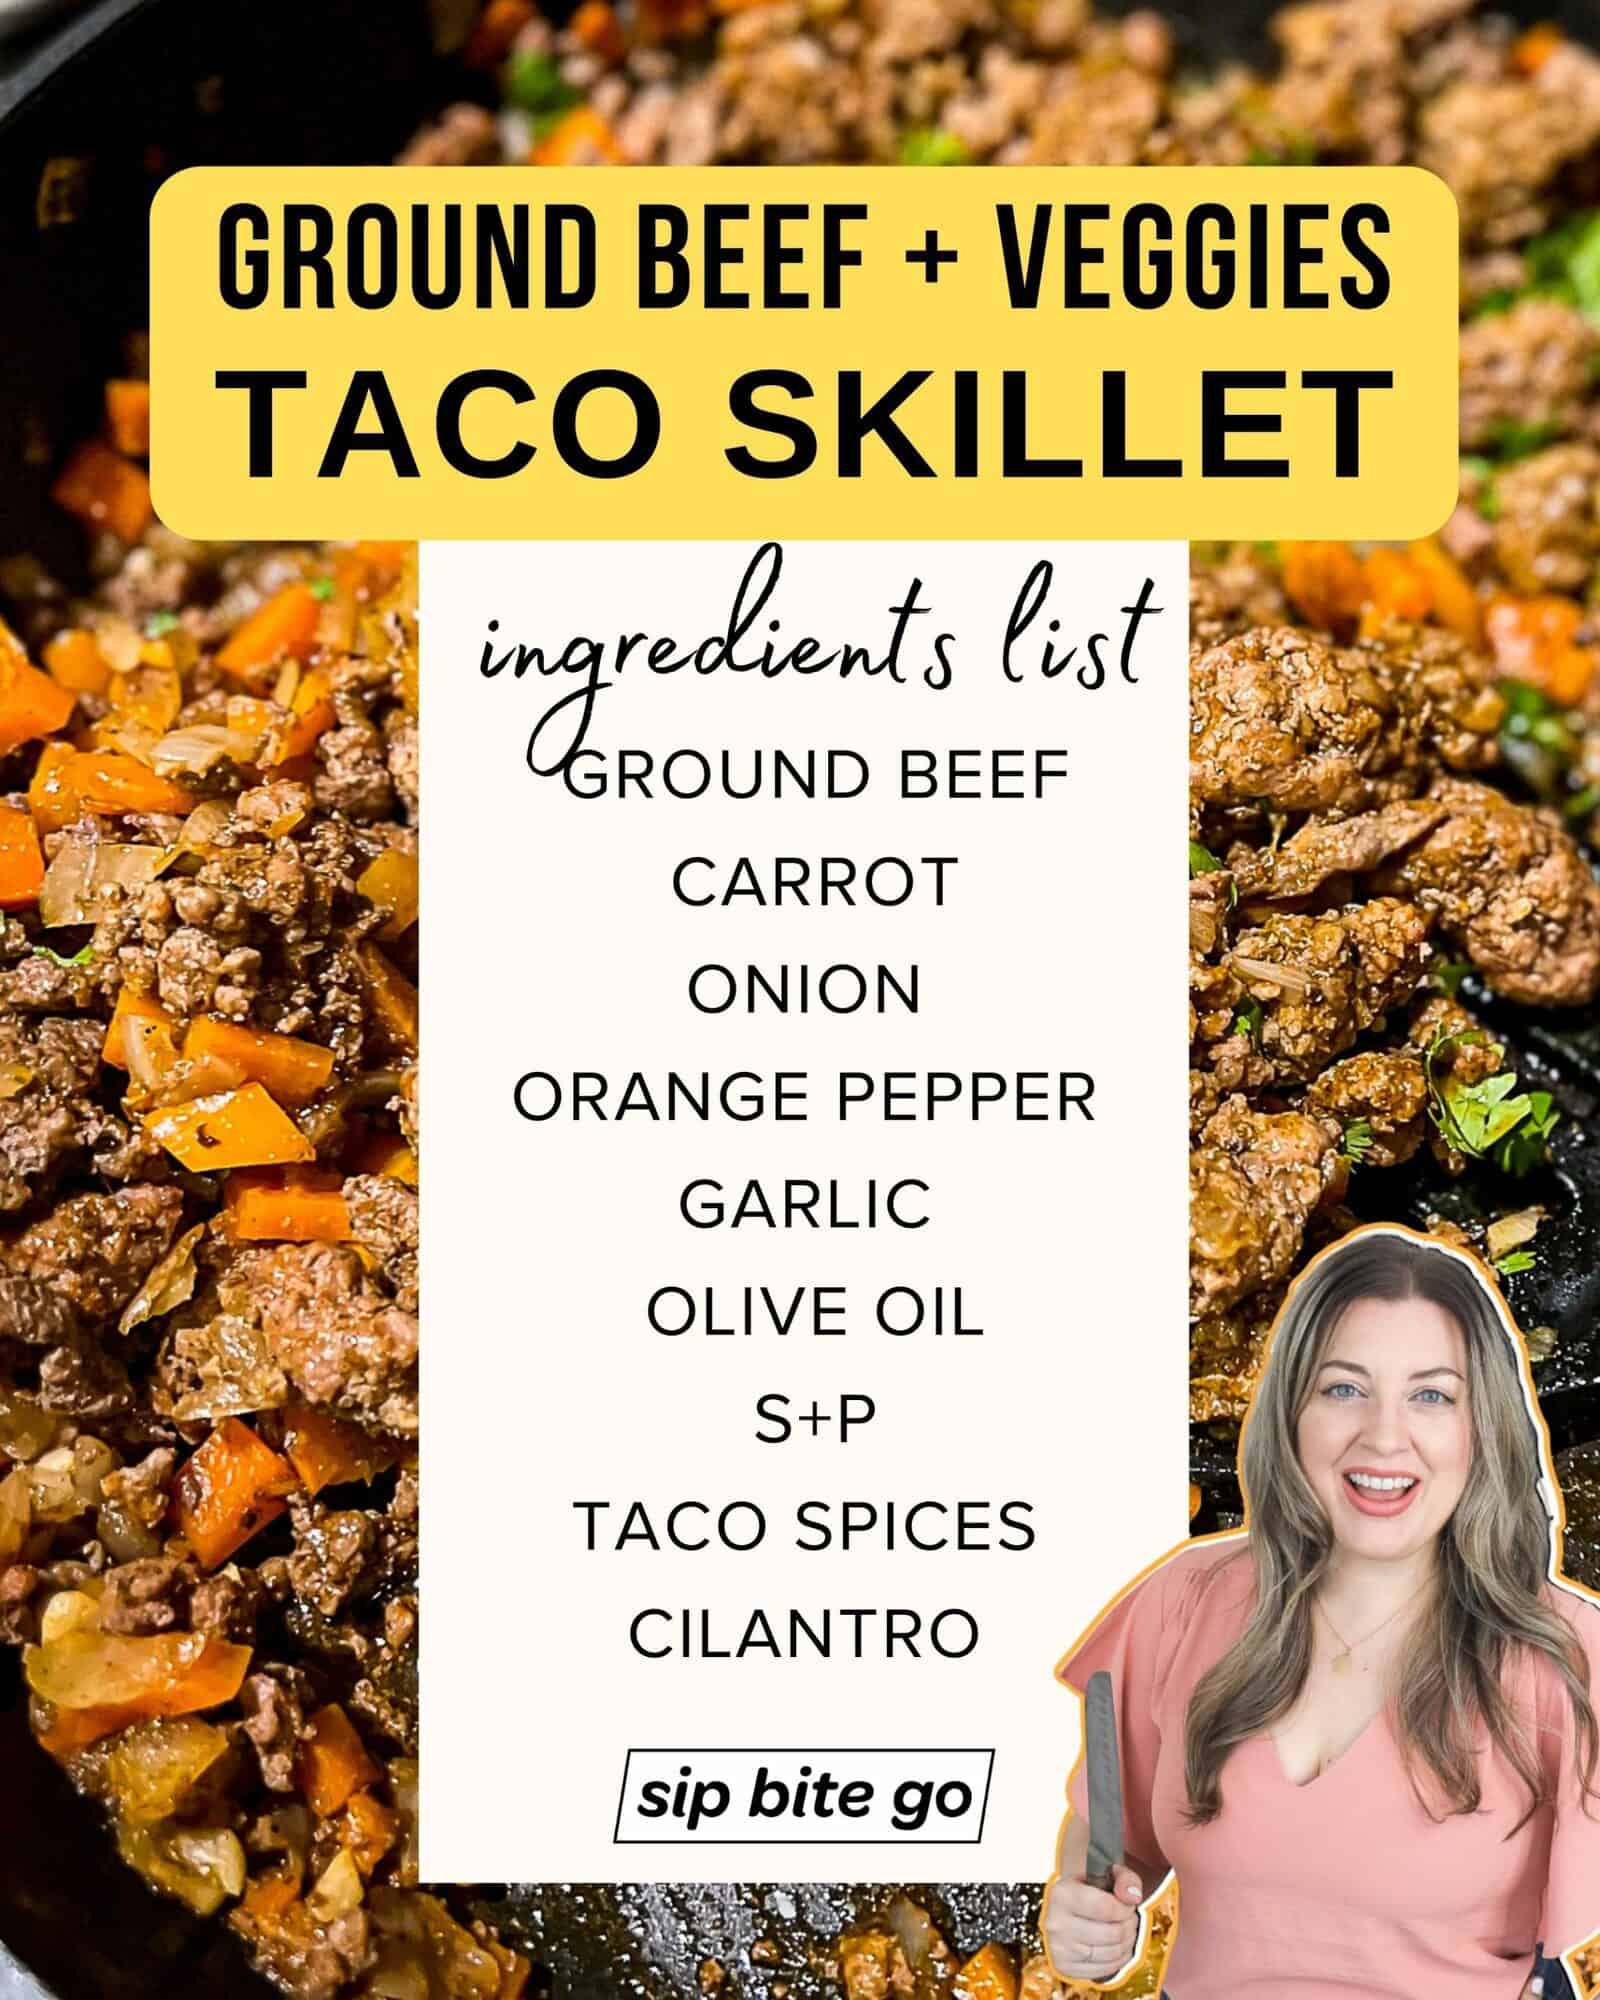 Ground beef vegetables recipe ingredients for taco skillet